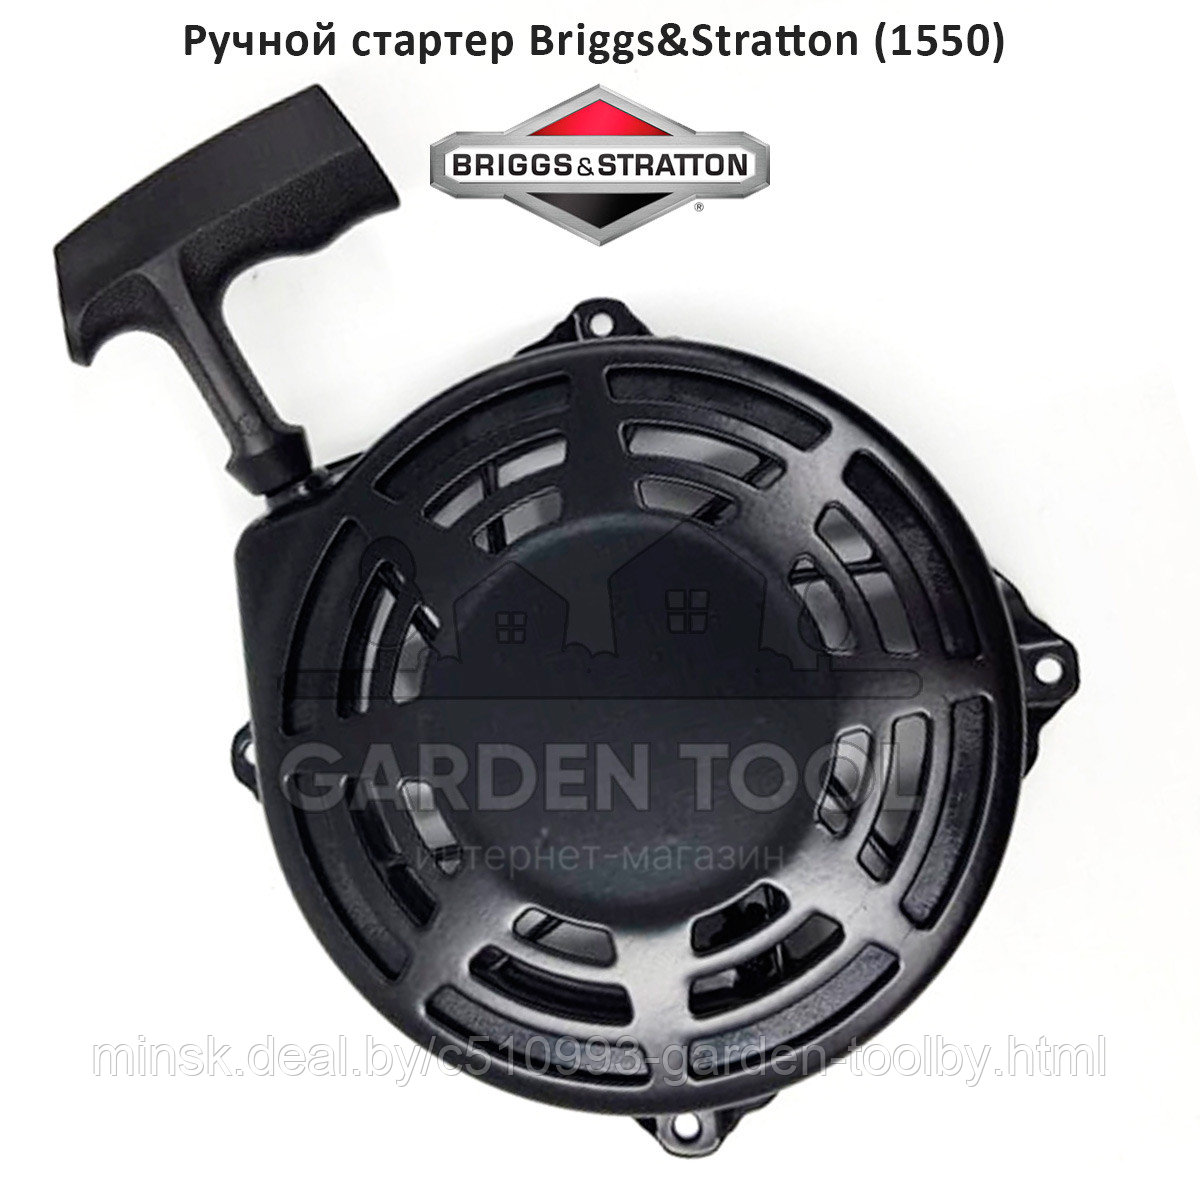 Стартер для двигателя BRIGGS & STRATTON серия 450, 500, 499706 690101 (1550)